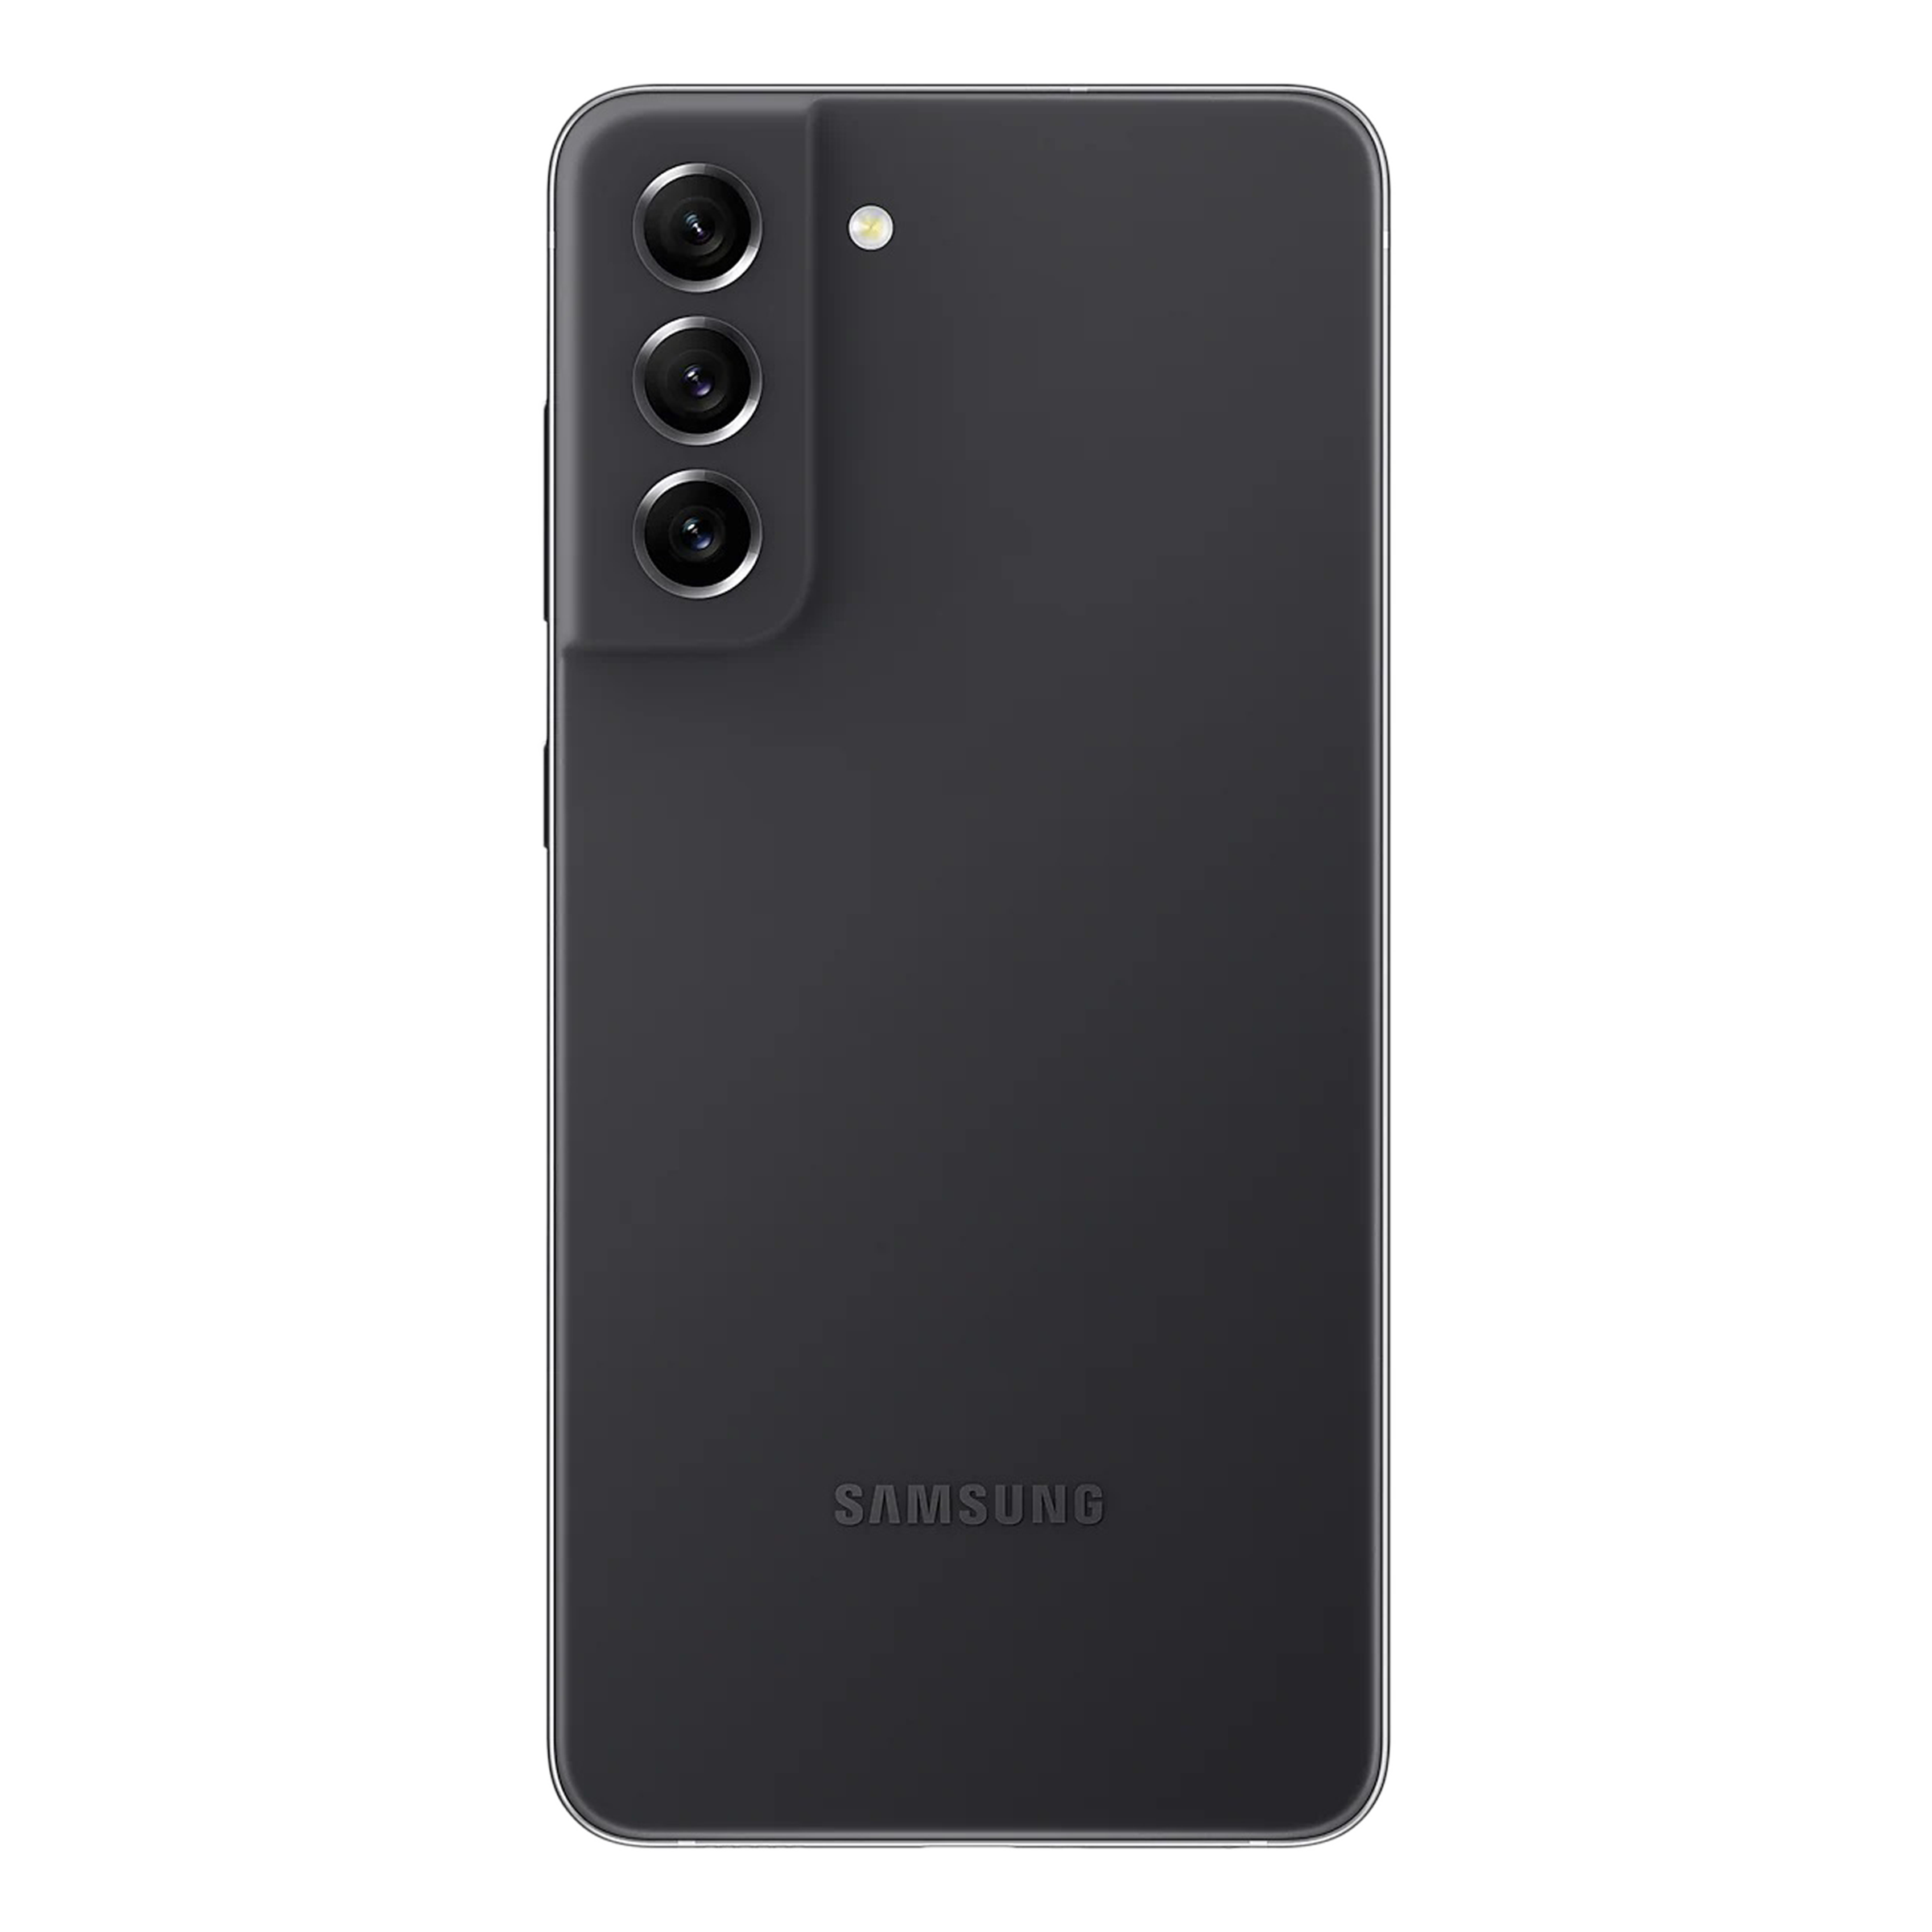 Samsung Galaxy S21 FE review % - Smartprix